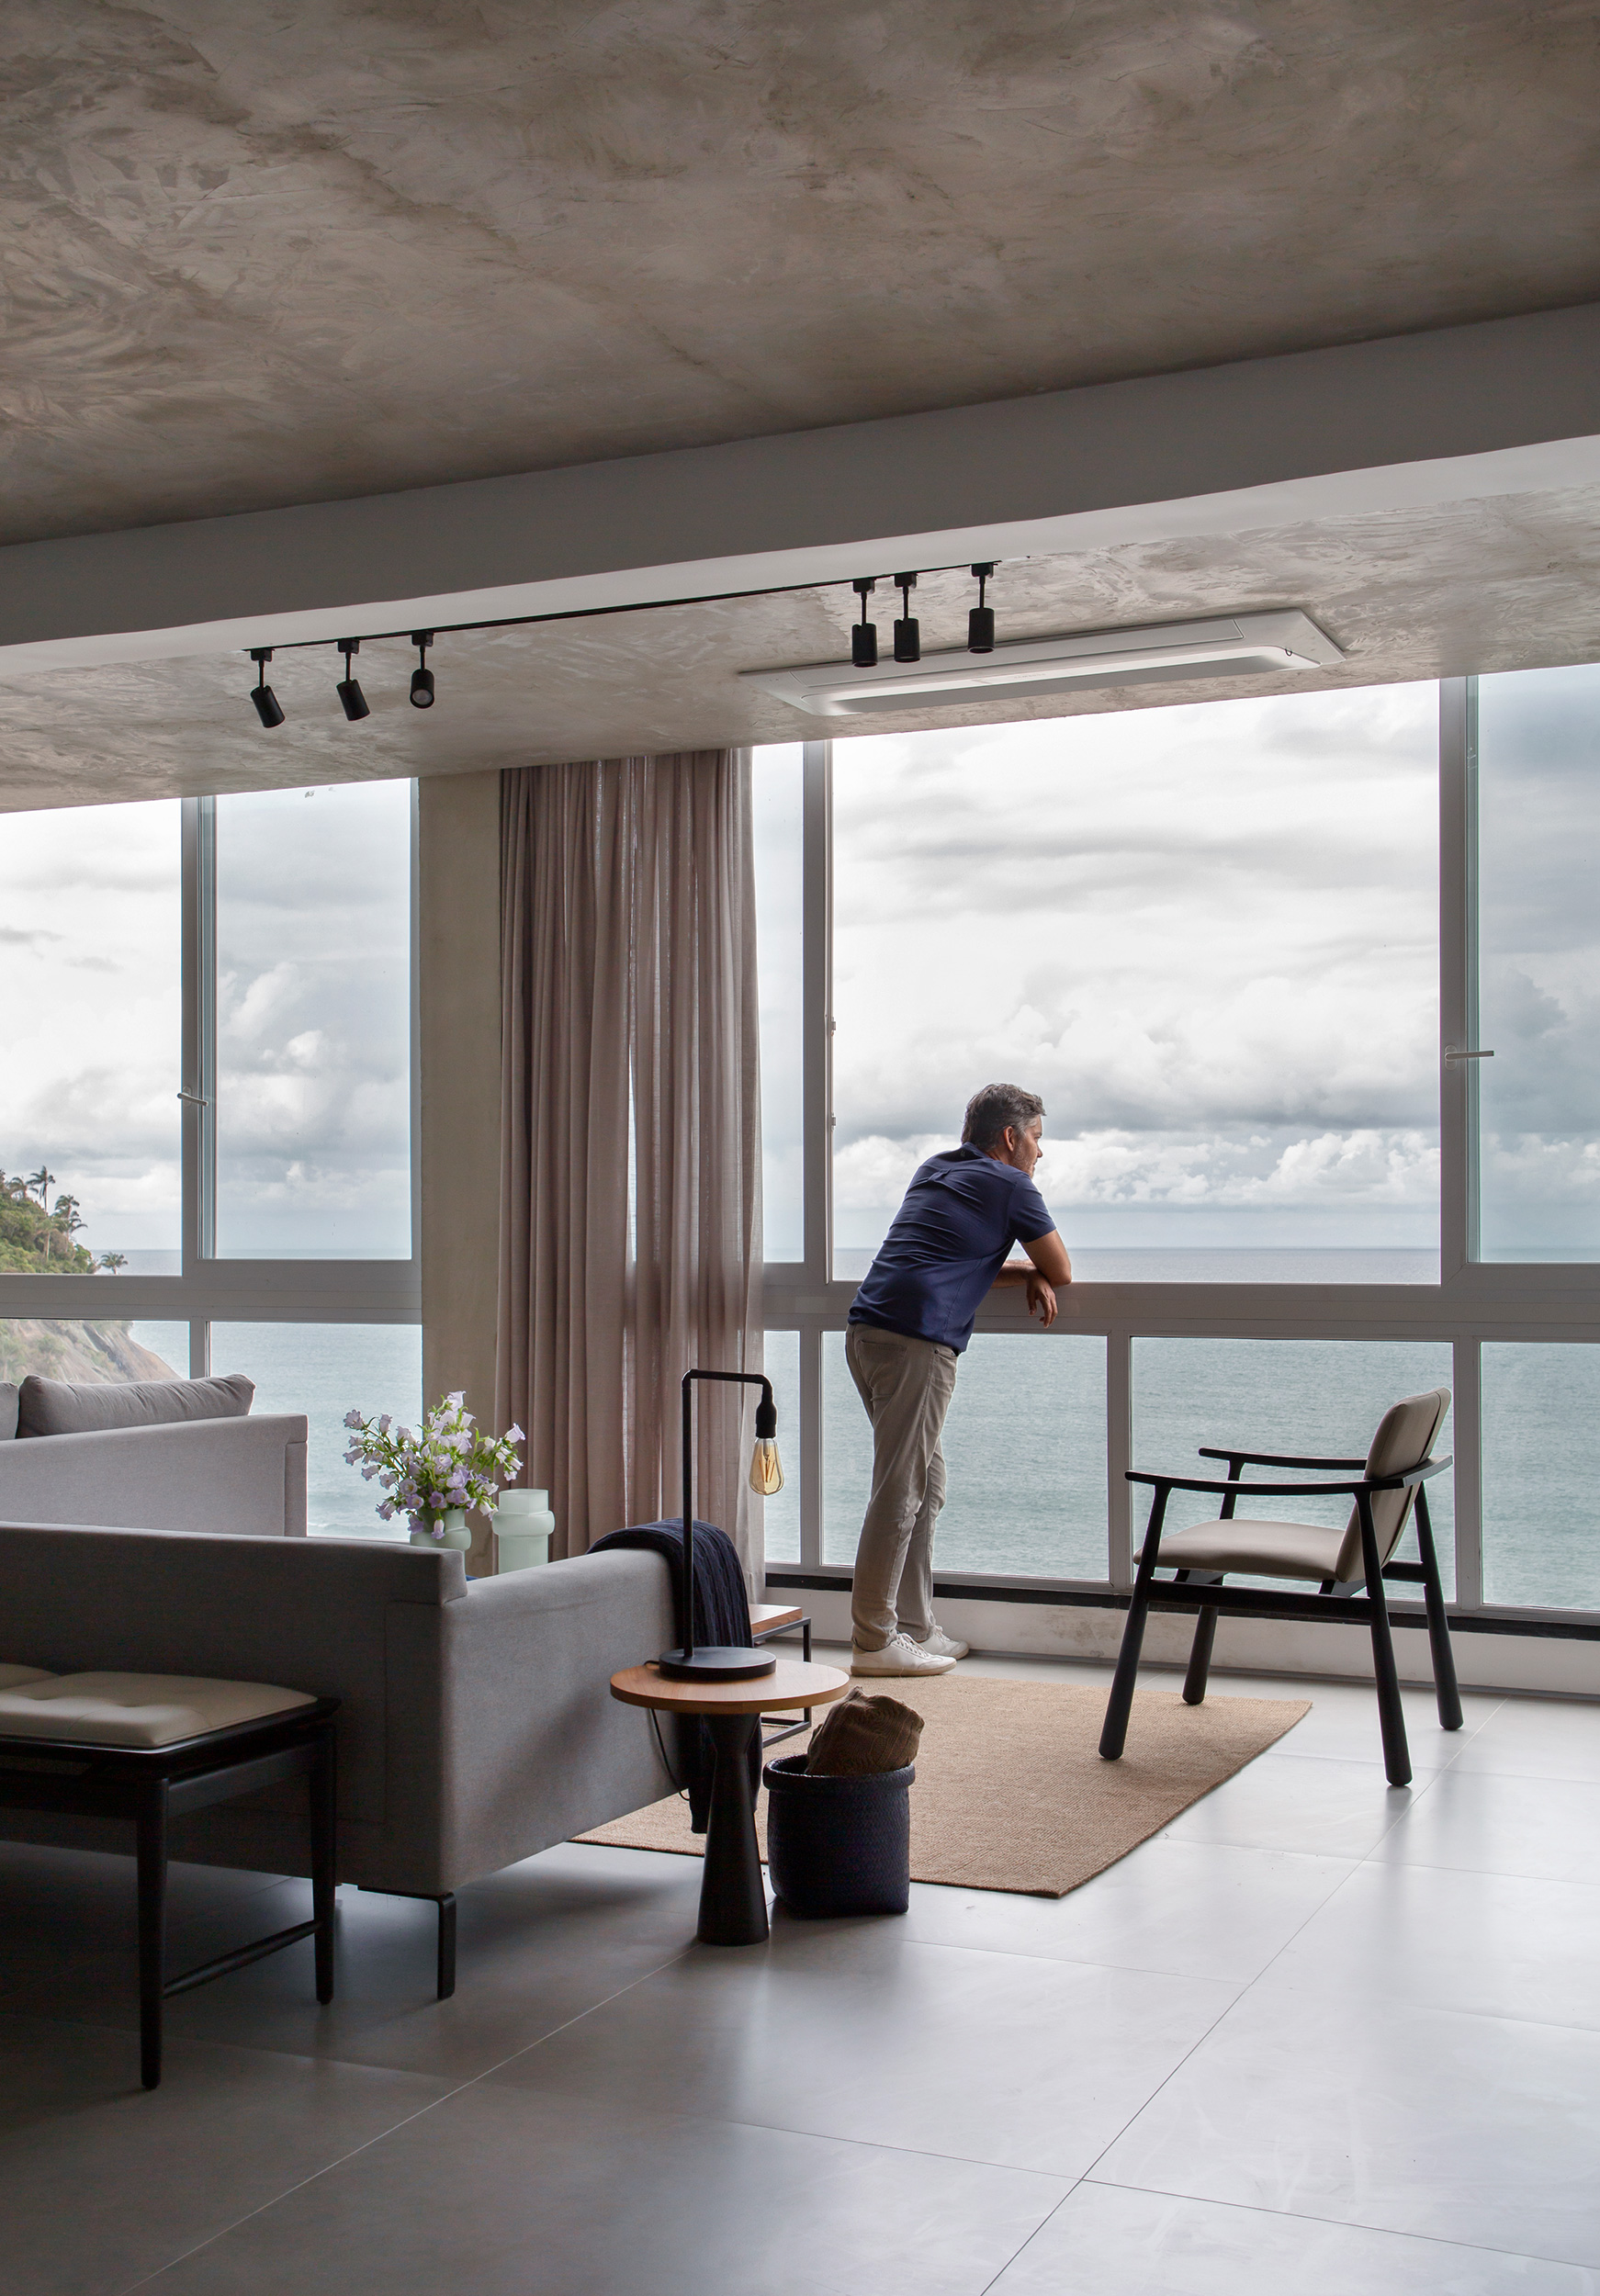 A vista para a praia do Leme é o pano de fundo deste apartamento de 180 m²